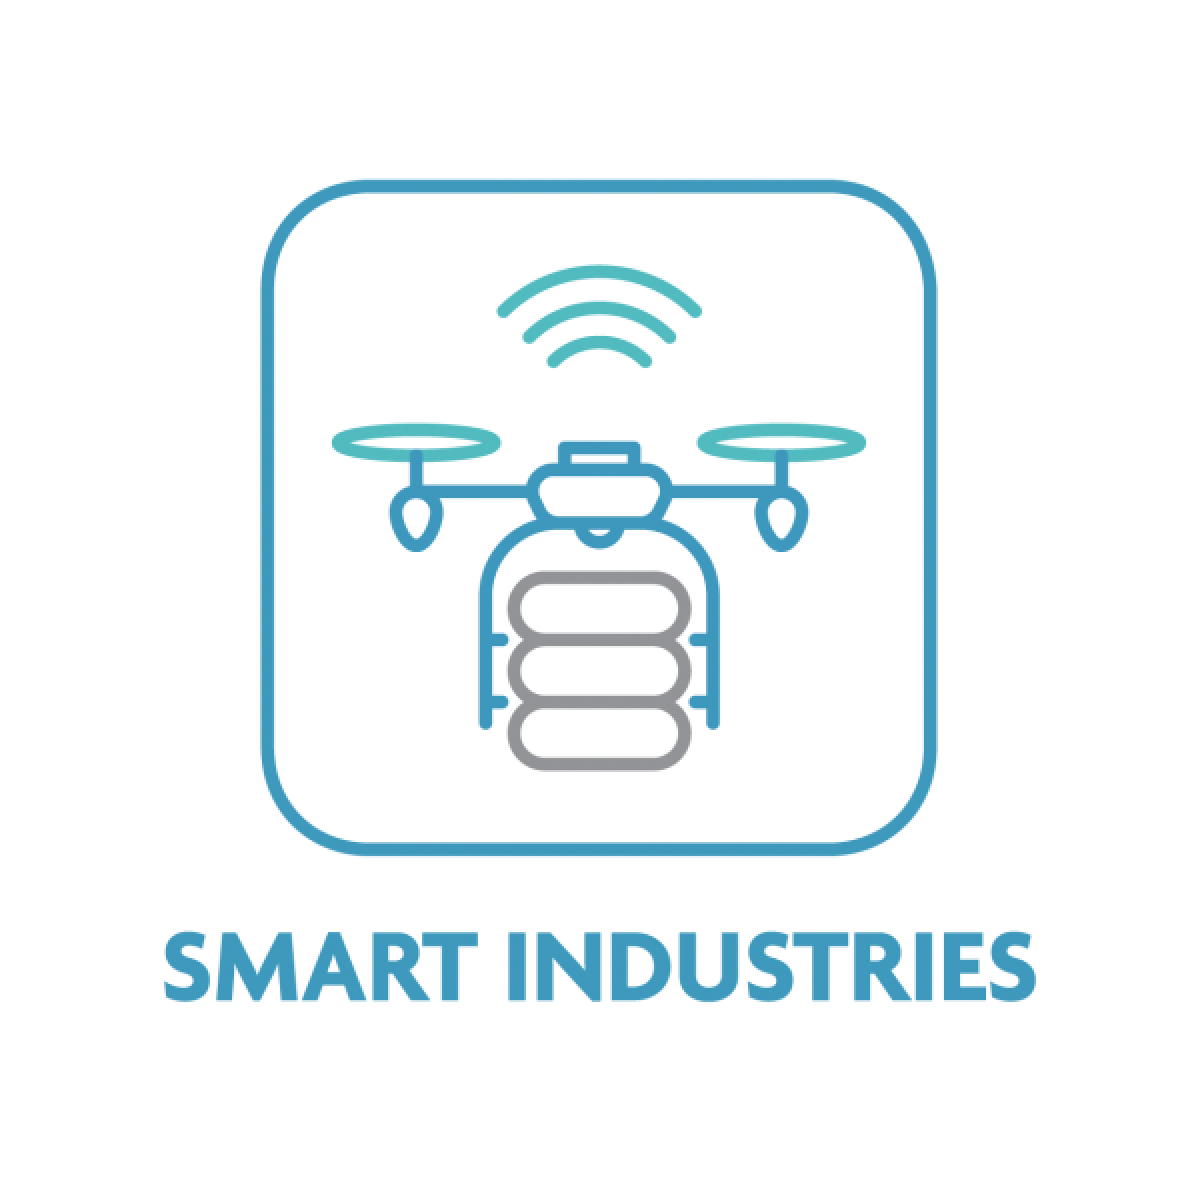 Smart industries logo